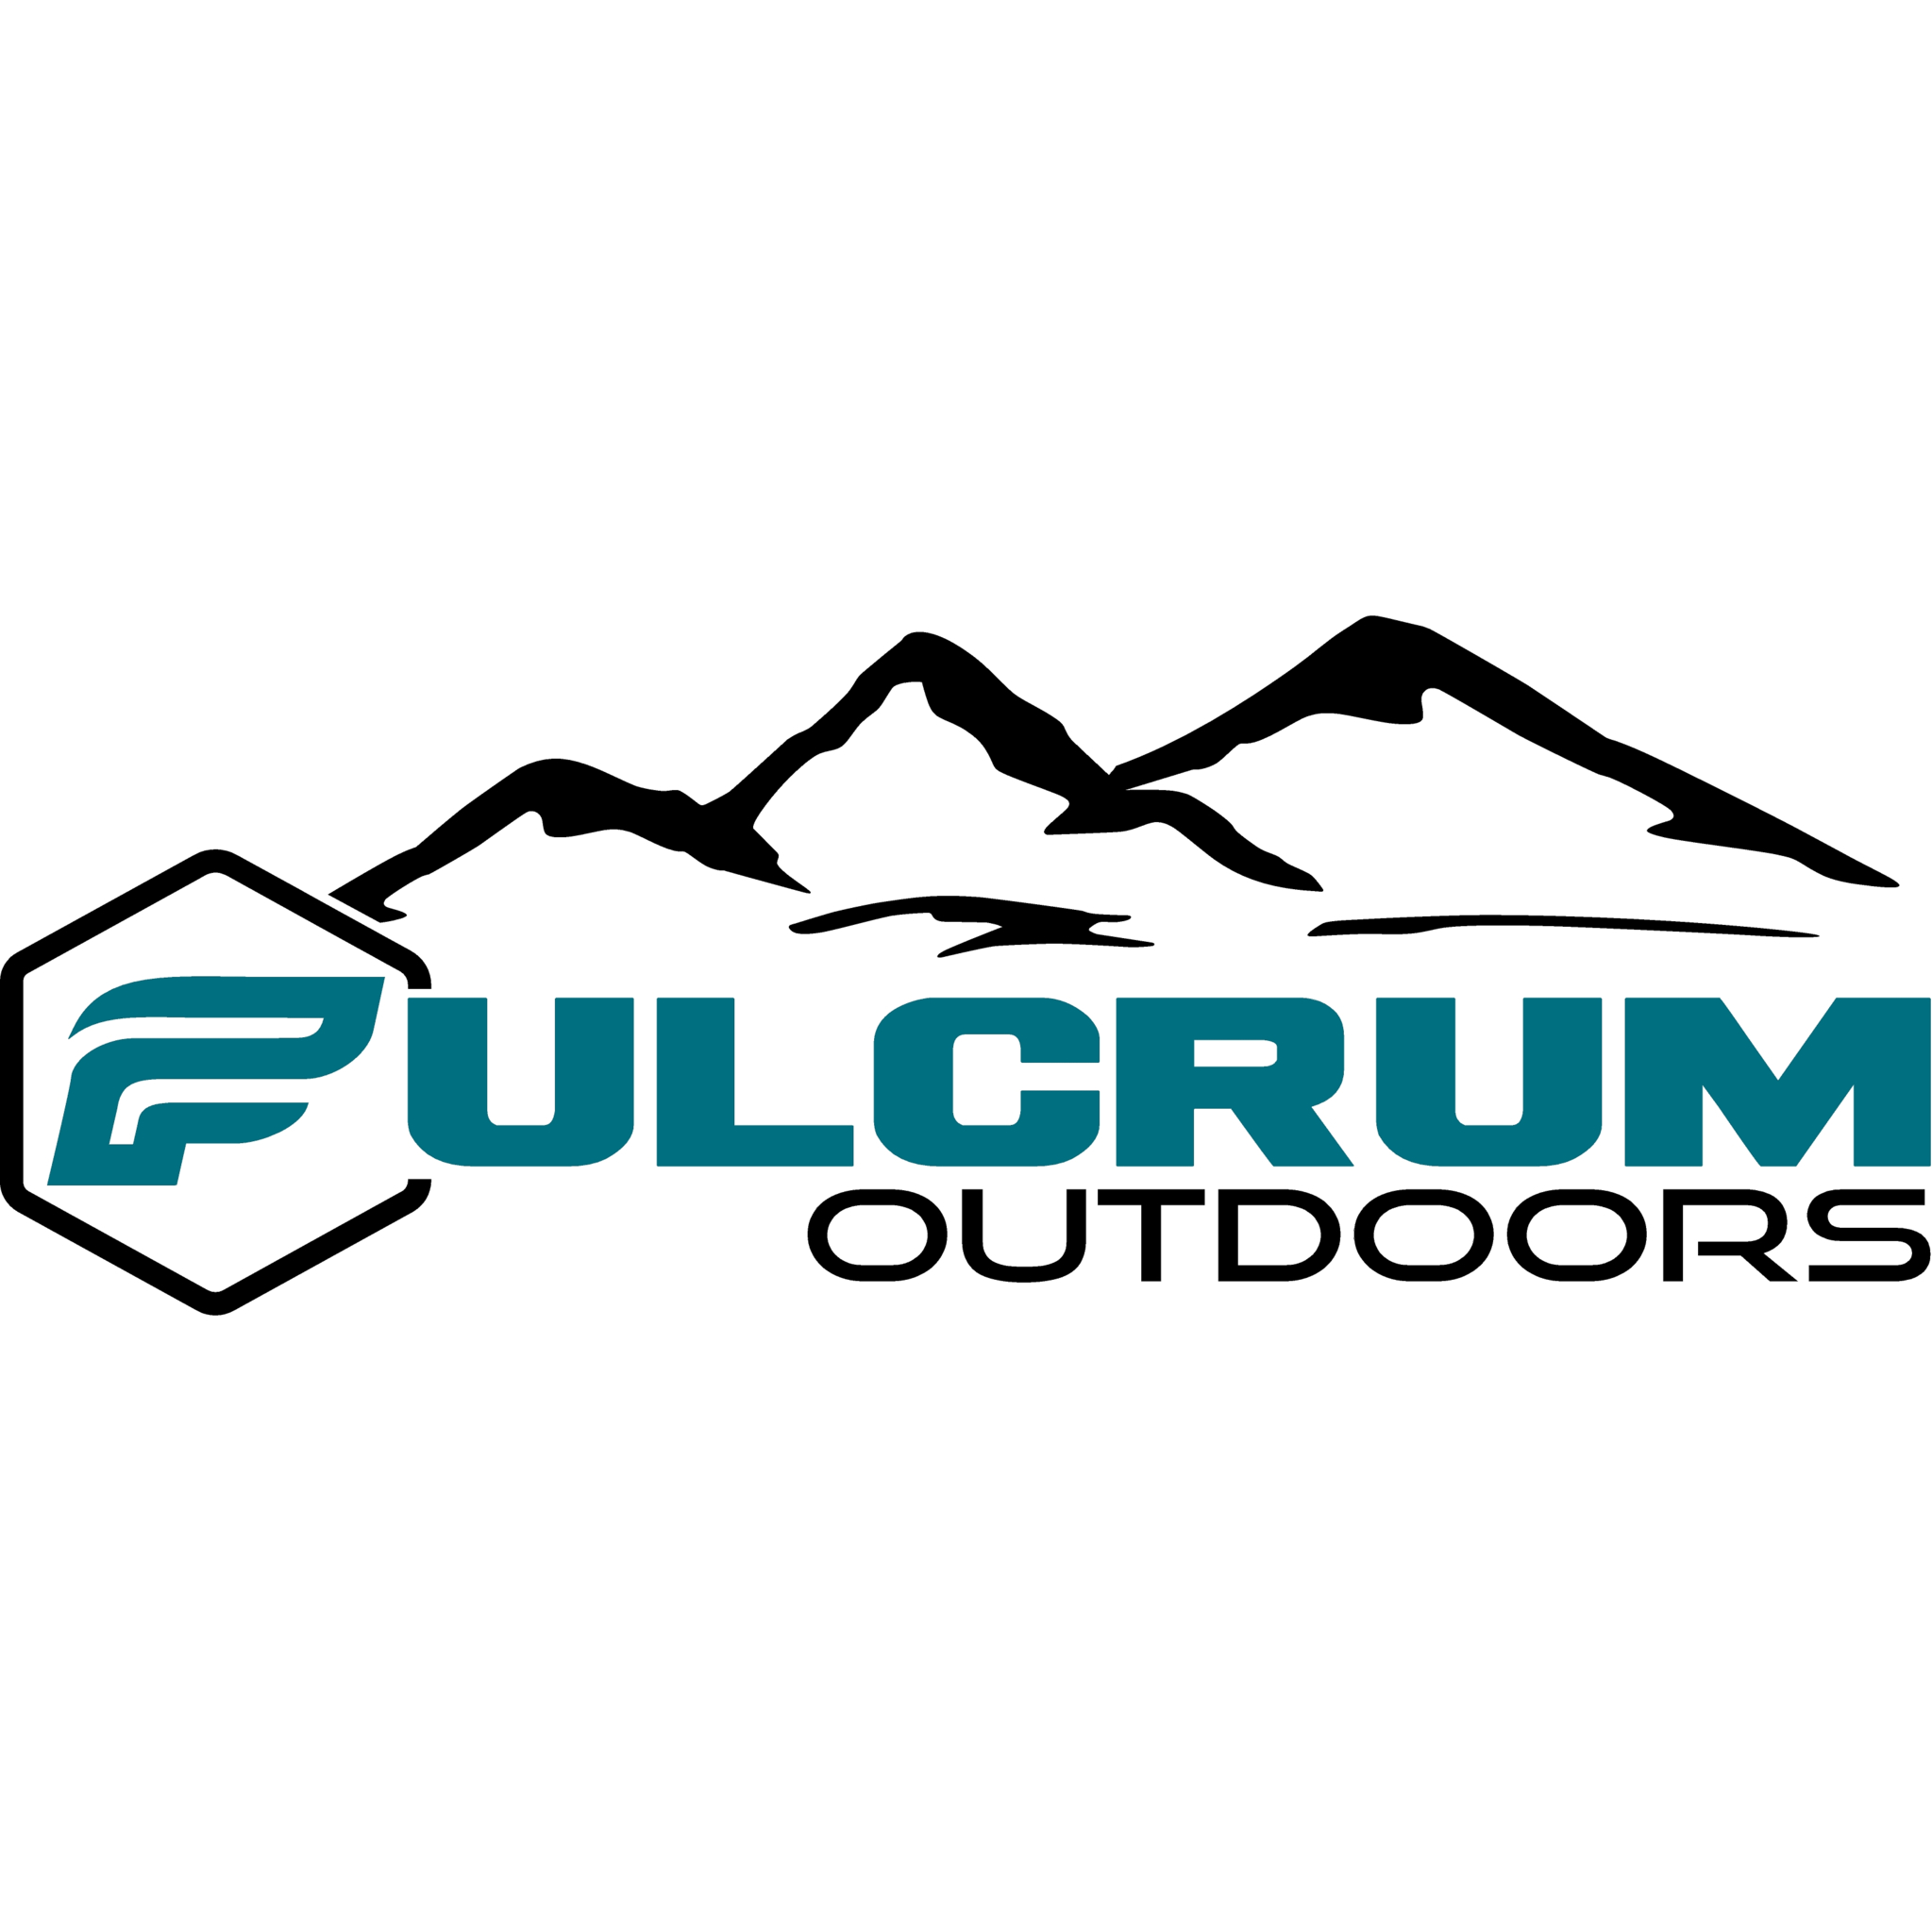 Fulcrum Outdoors - Magasins d'articles de sport